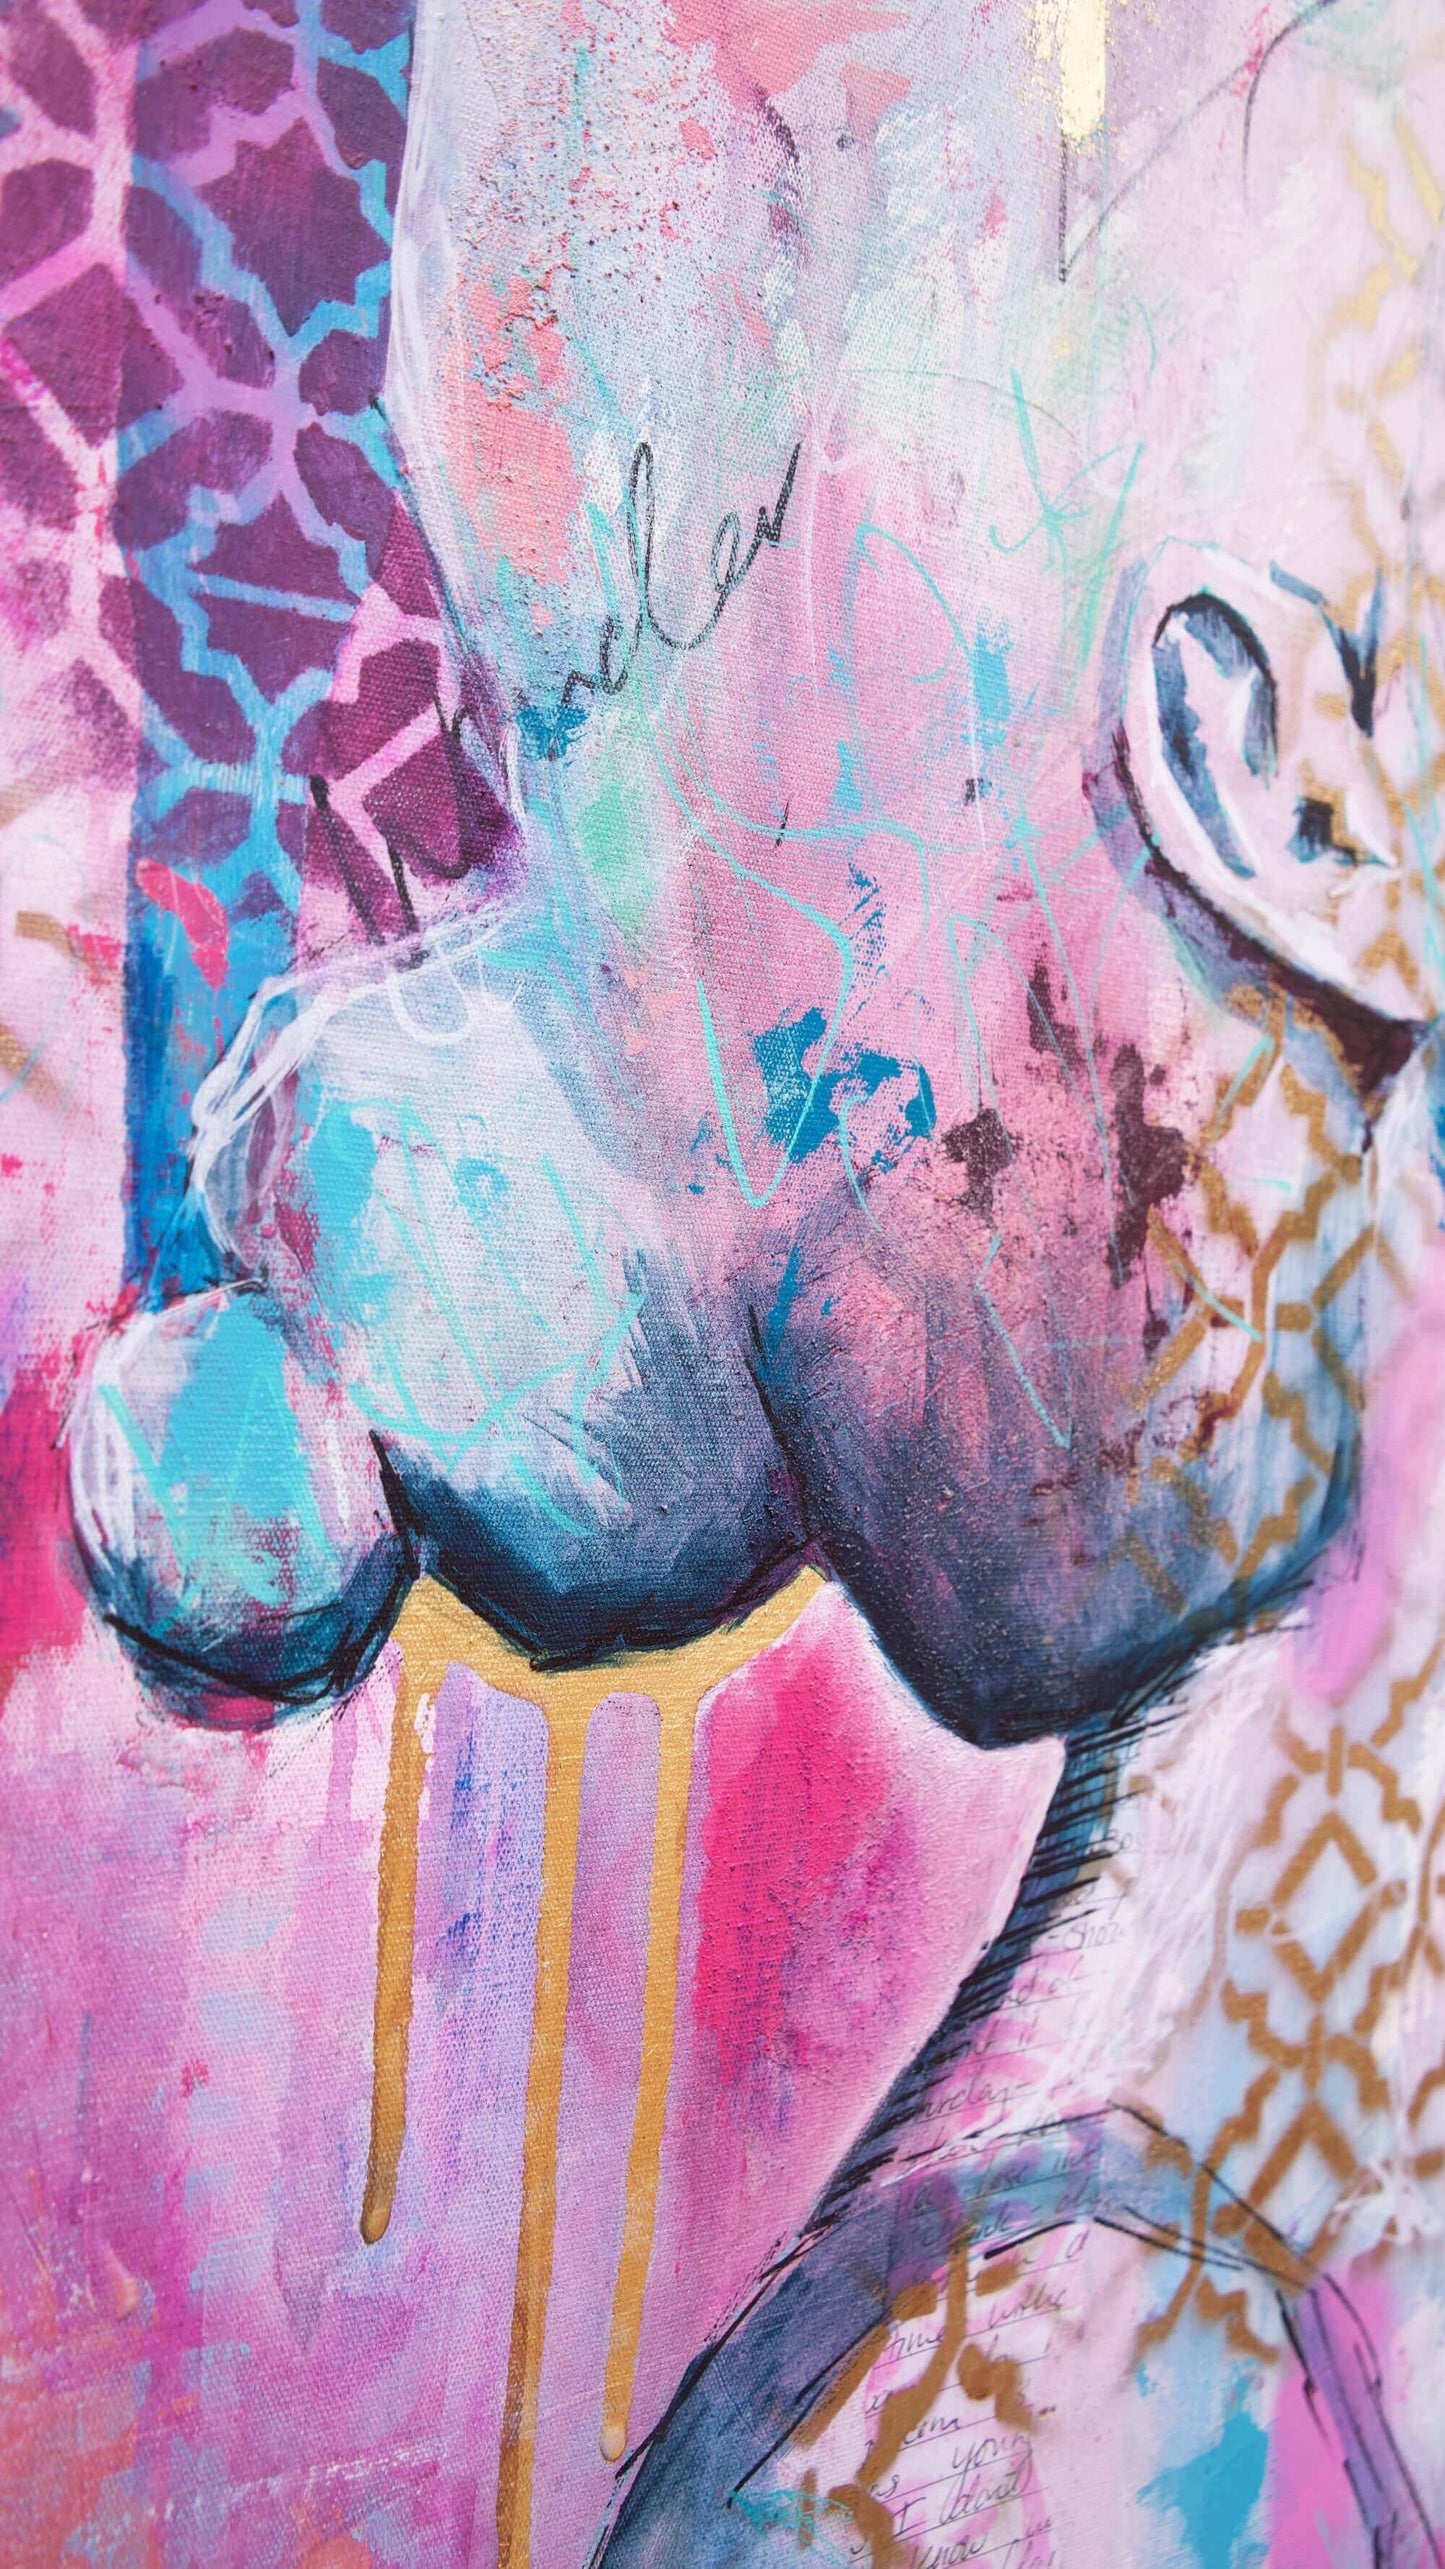 artworks for sale art in melbourne street art style portrait pink woman